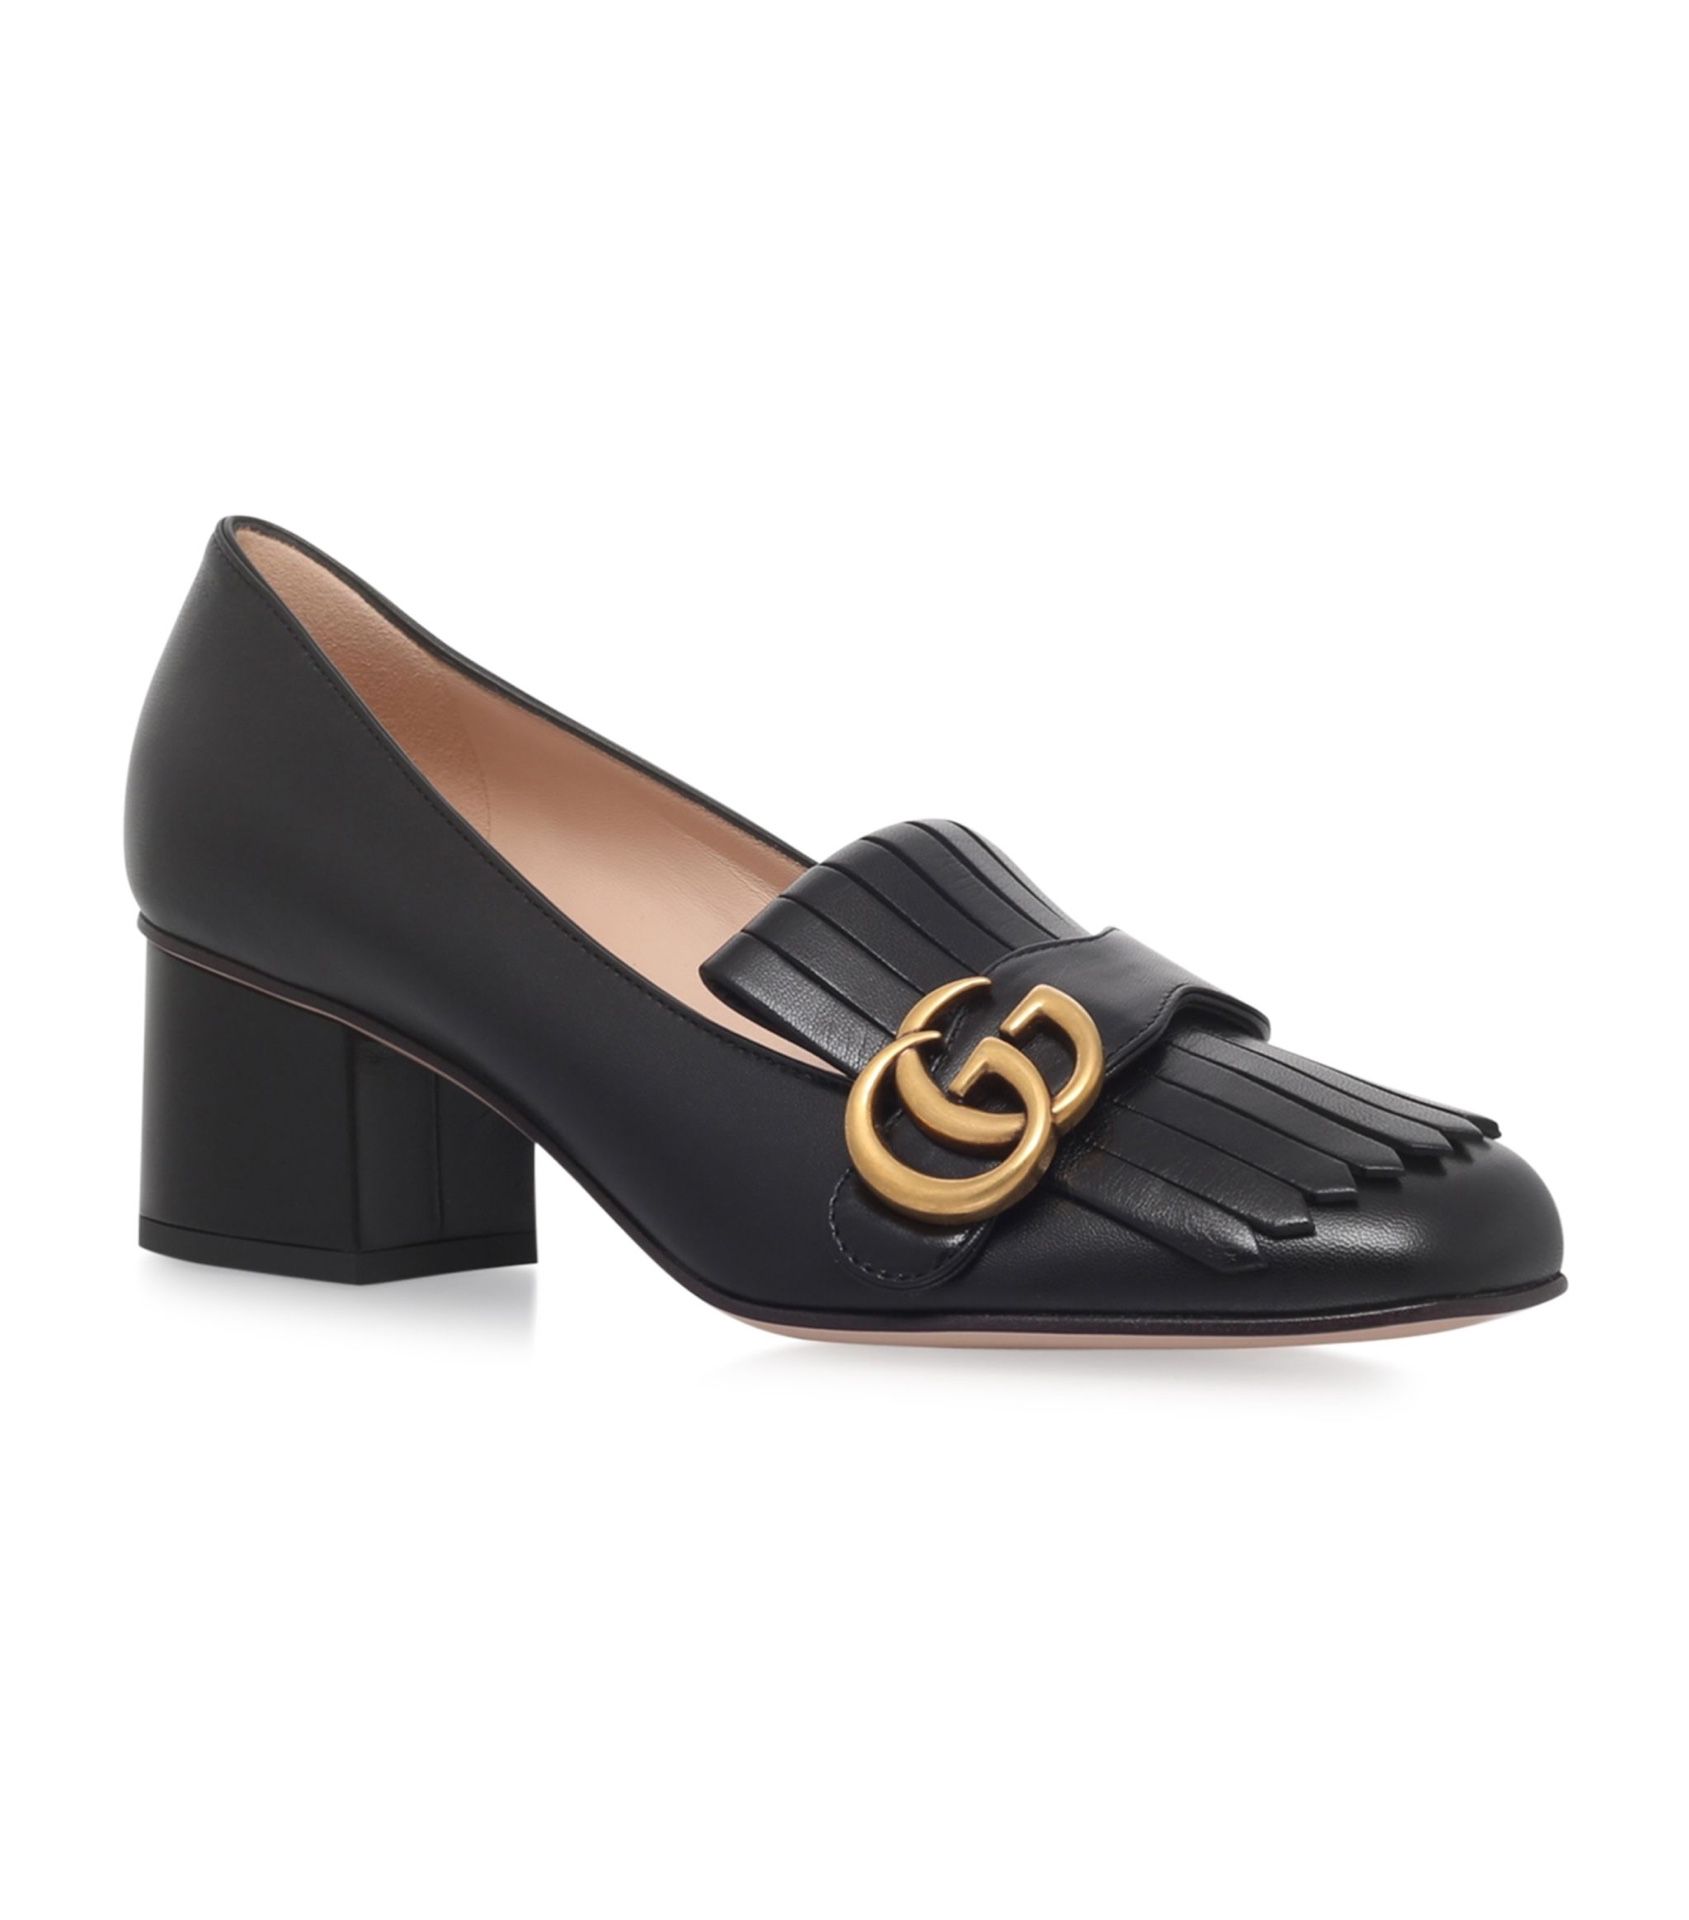 Authentic Gucci Marmont mid heels pumps size 36